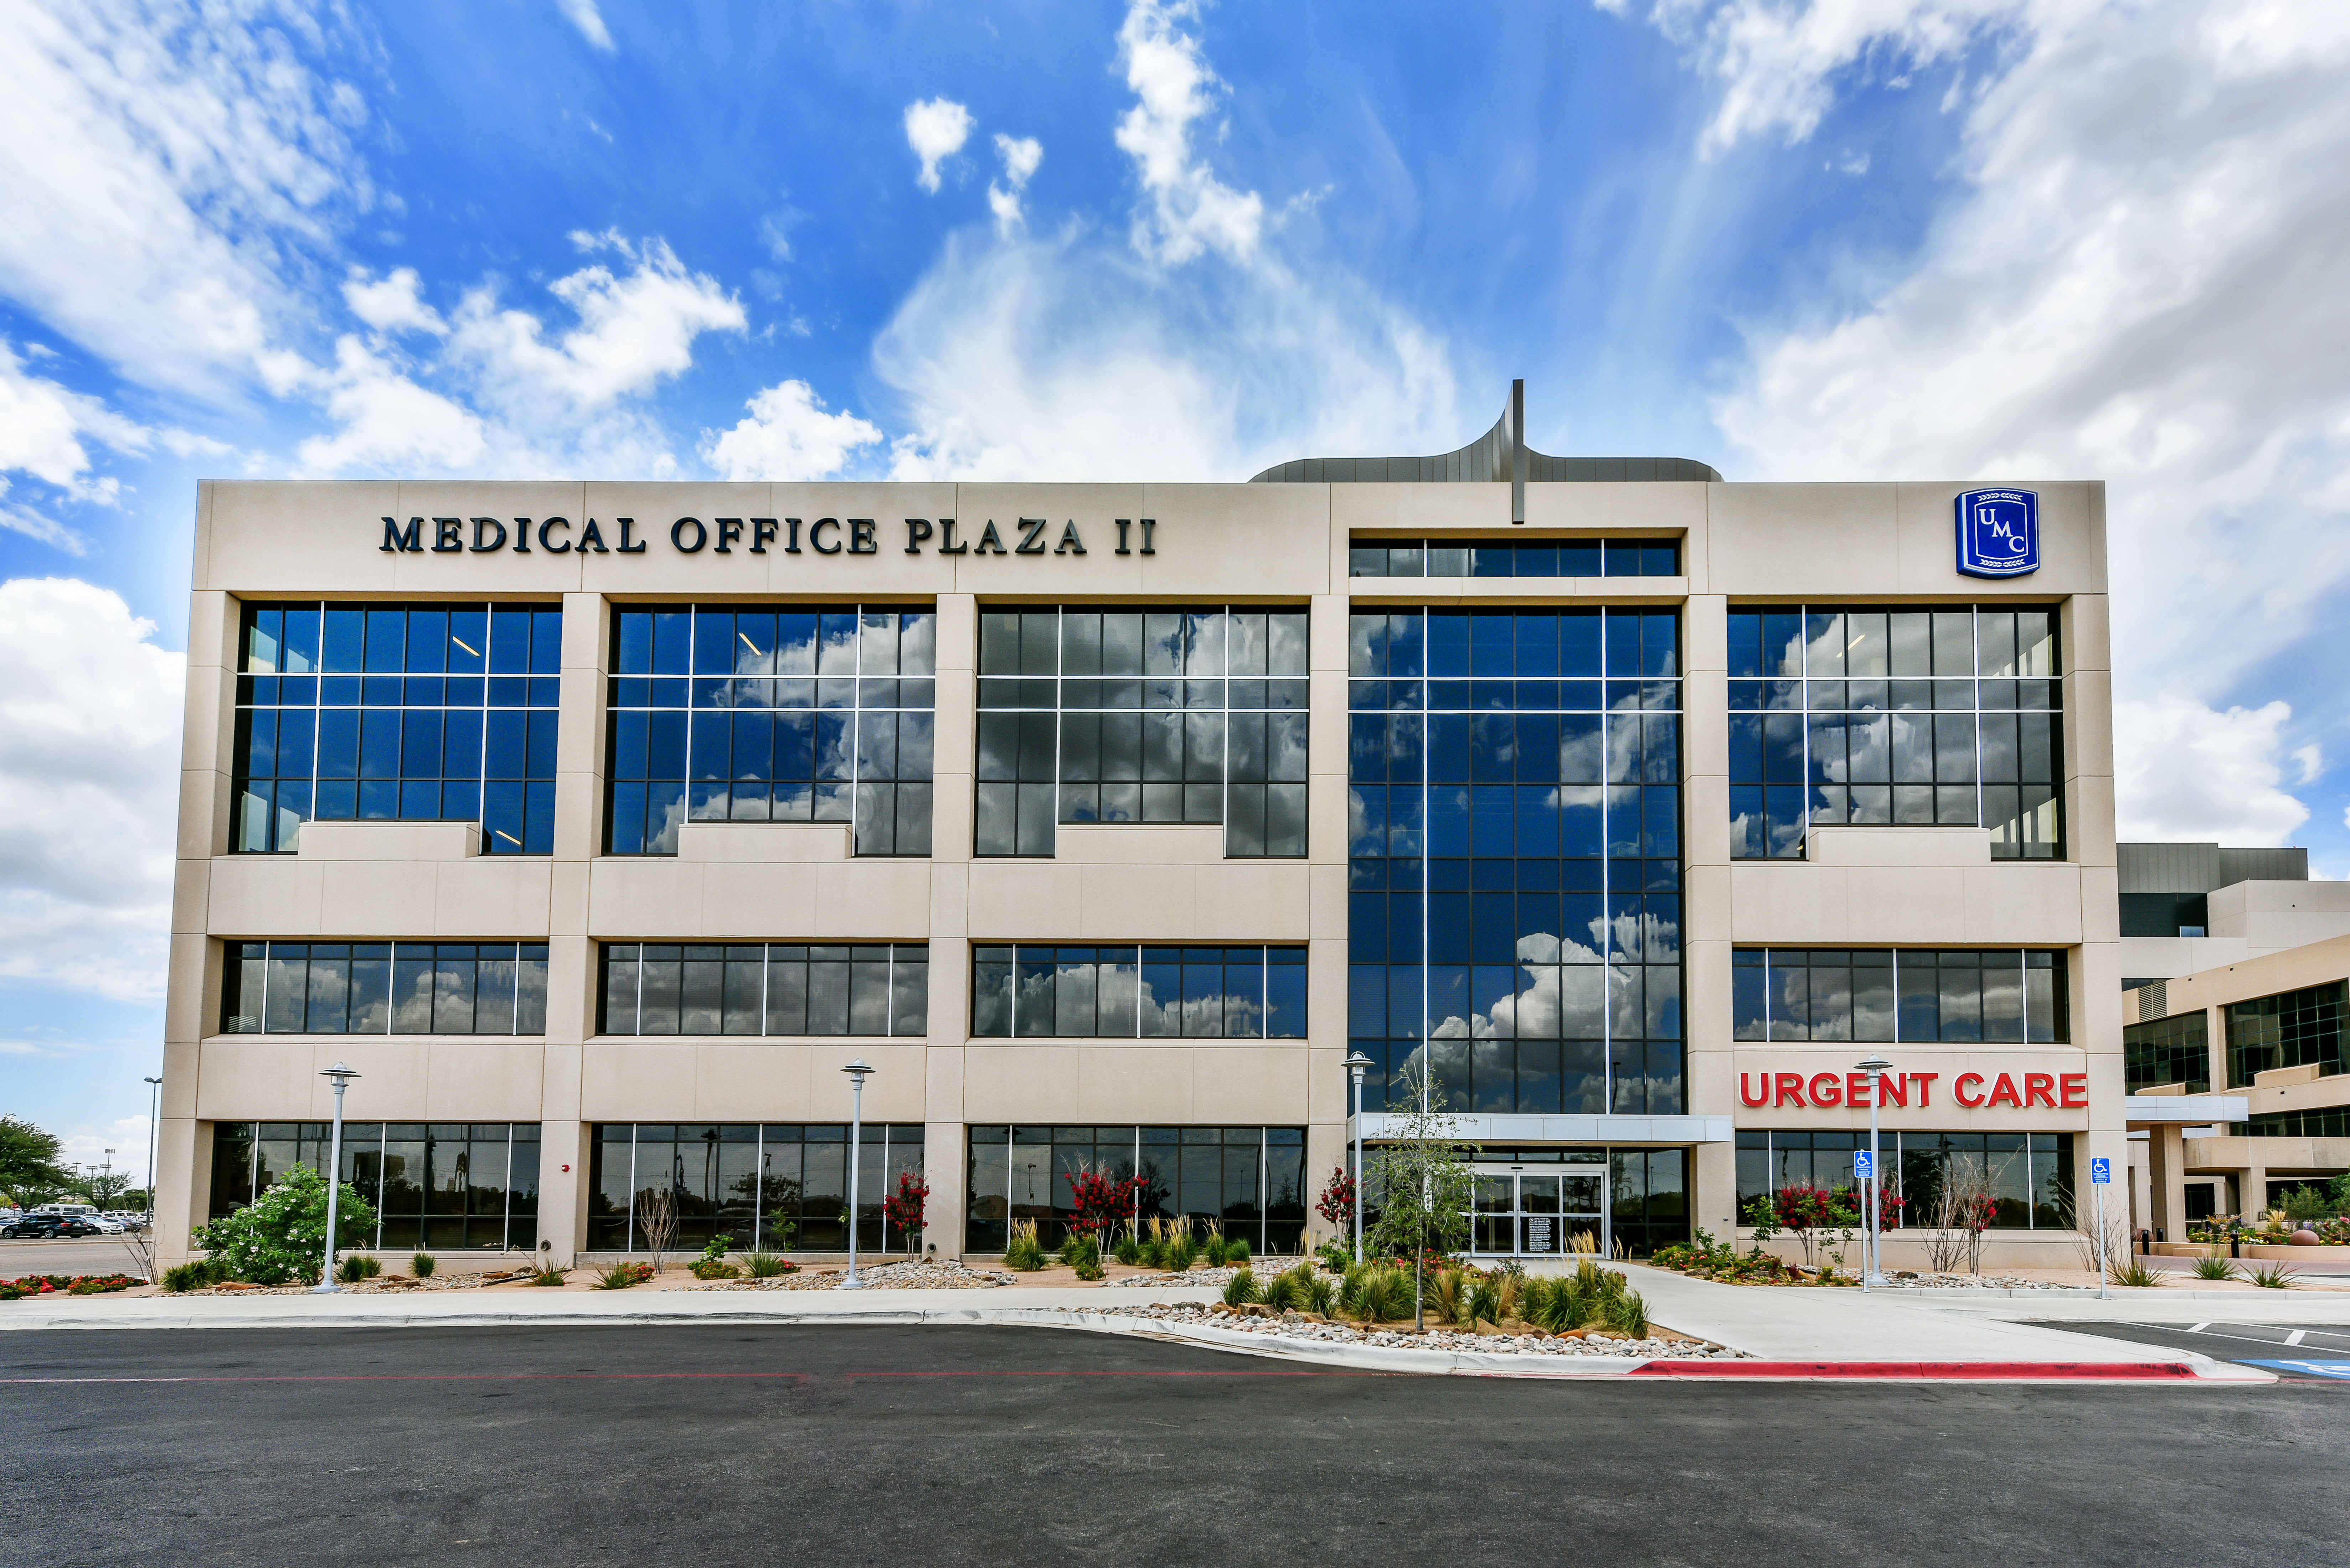  UMC Medical Office Plaza II category